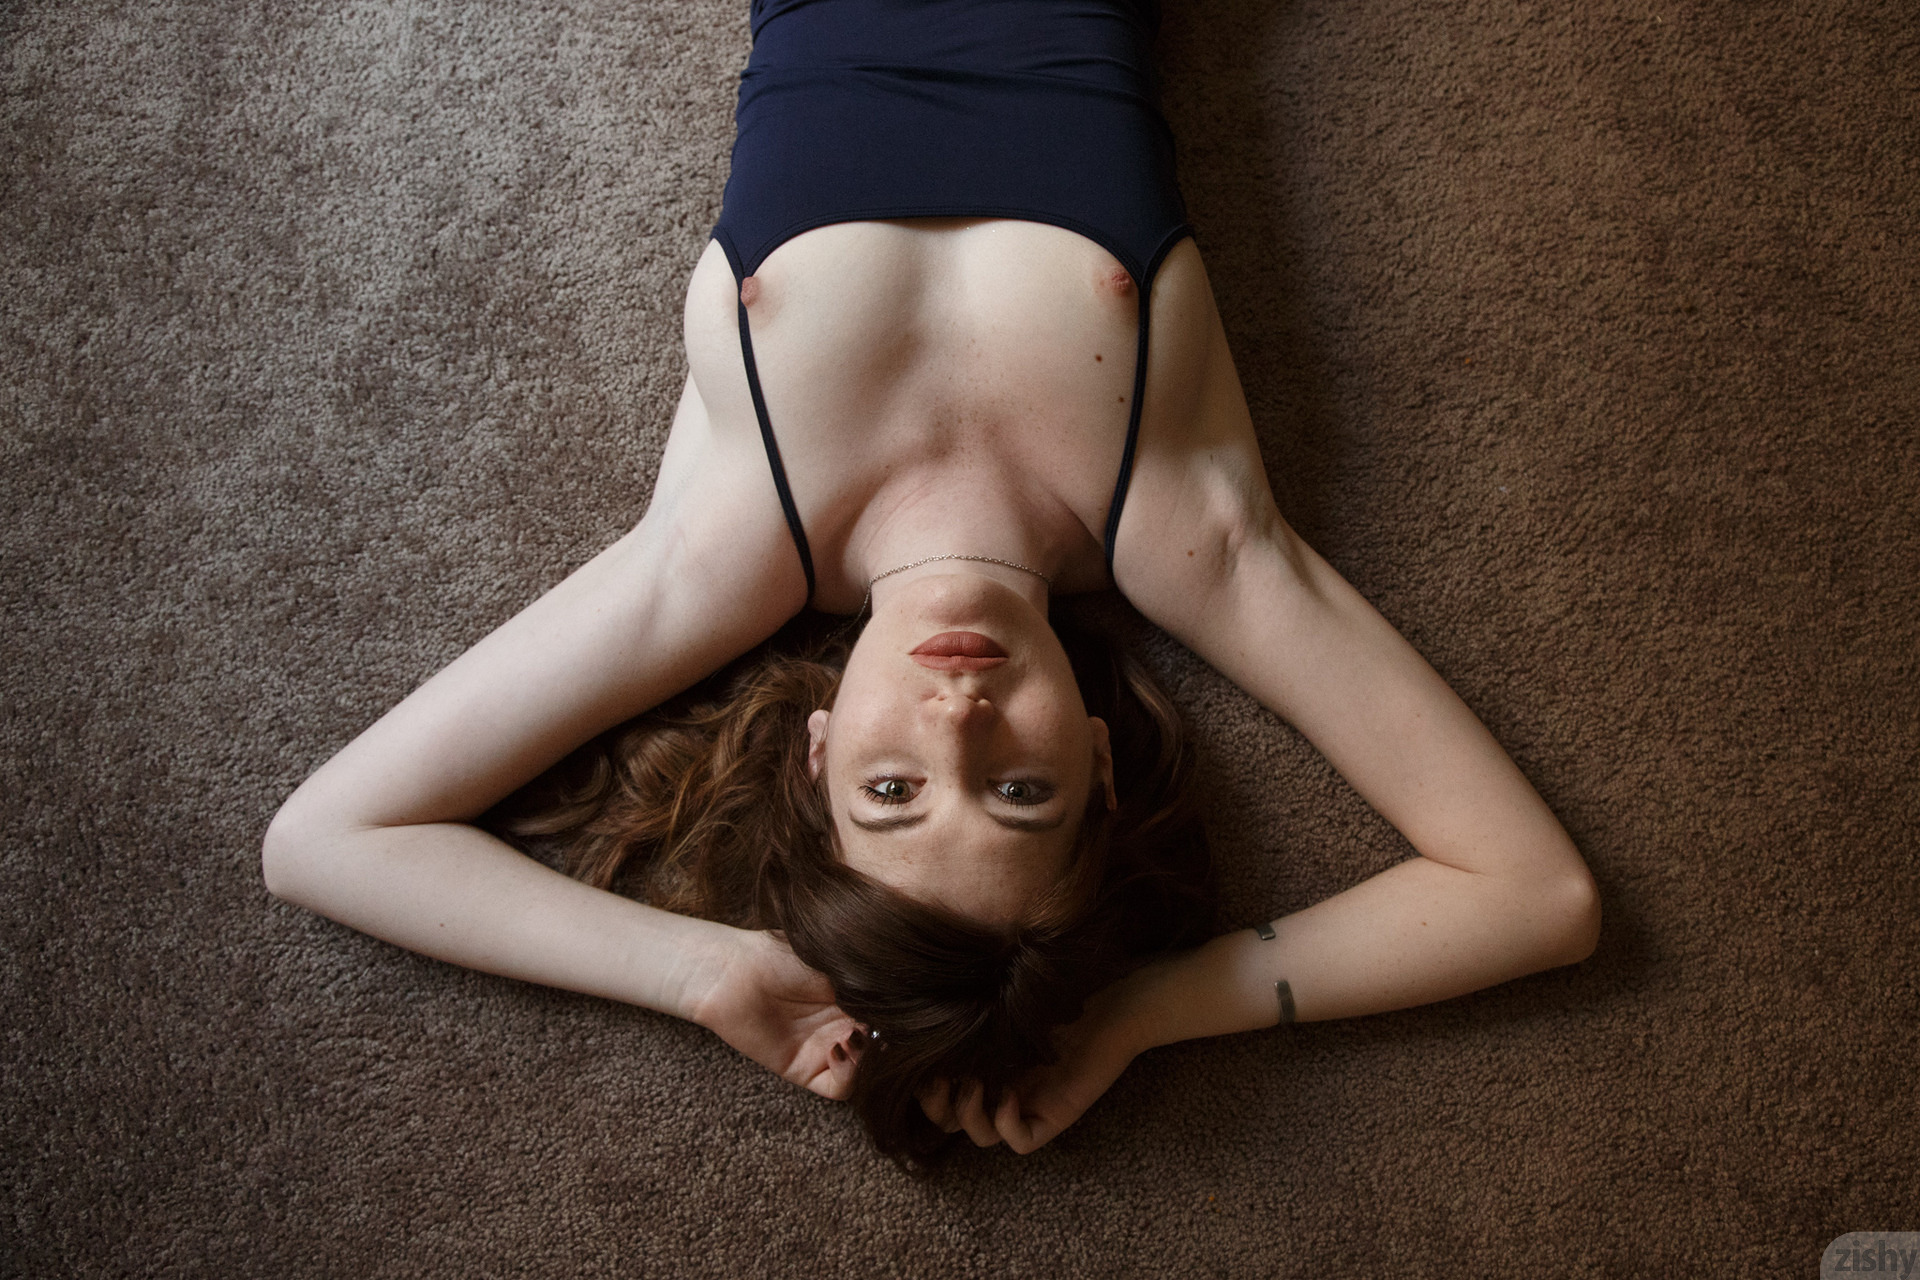 Zoe Fletcher On The Floor Porn Pic